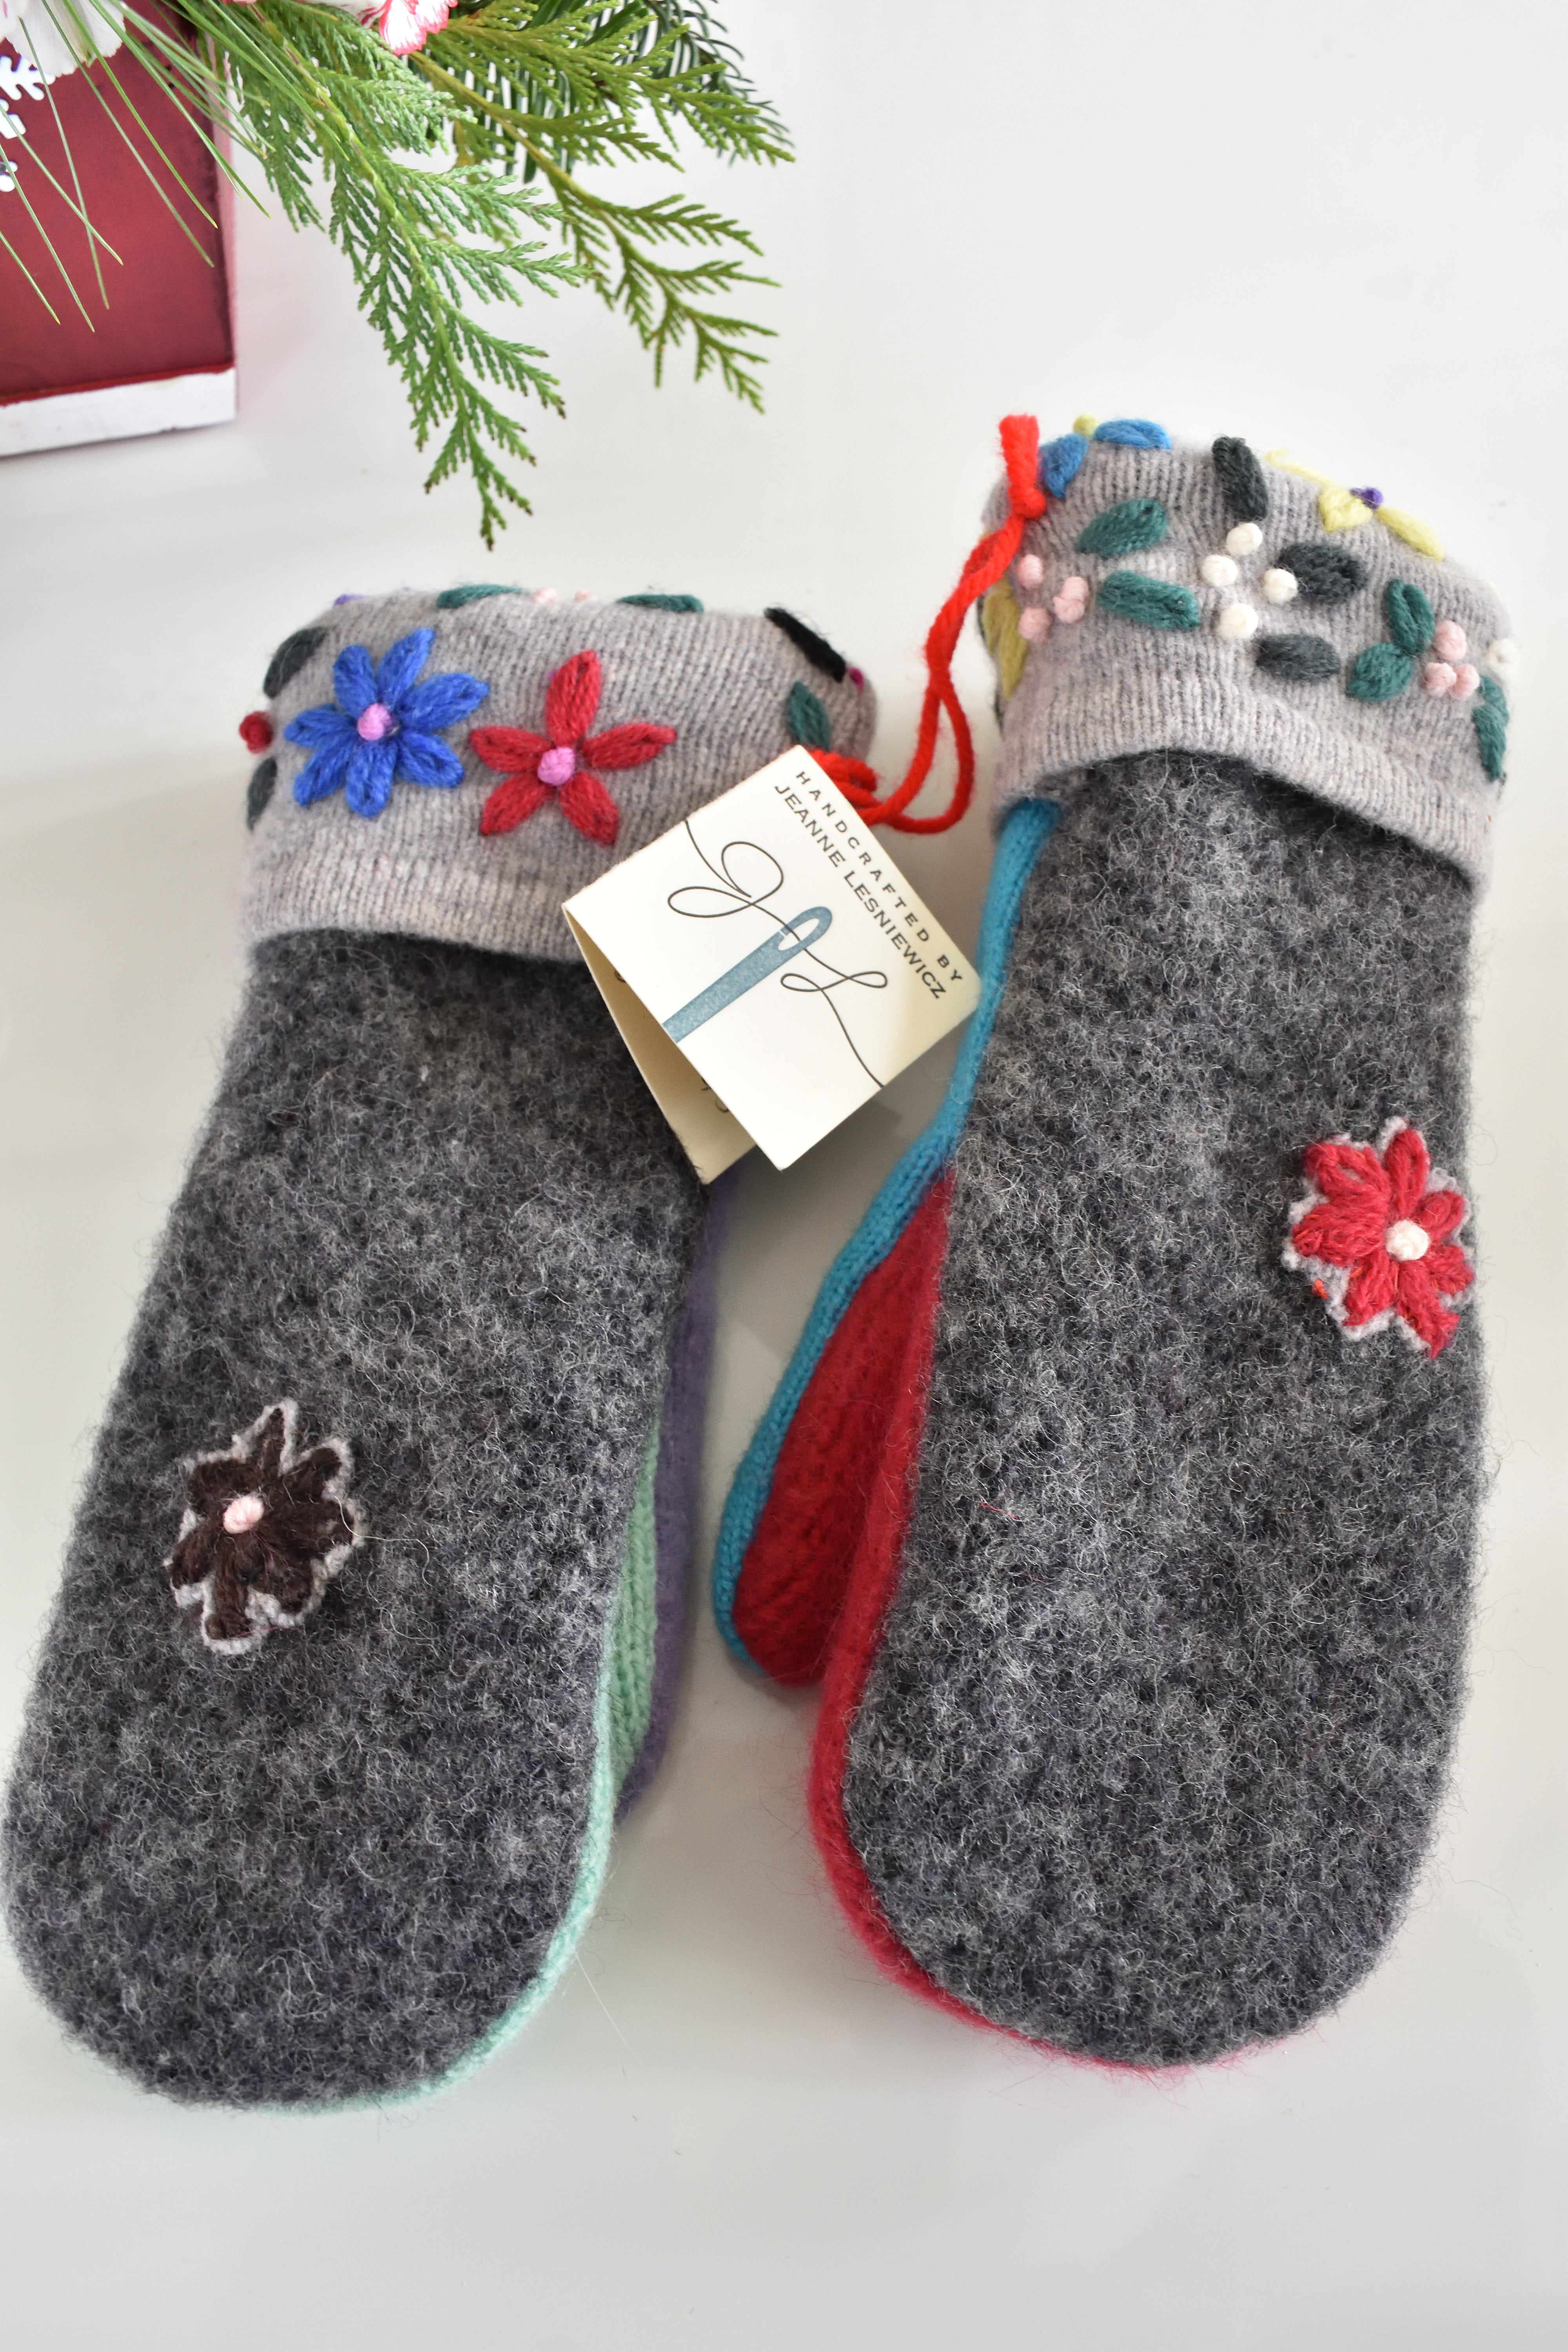 Christmas gift ideas, handmade mittens